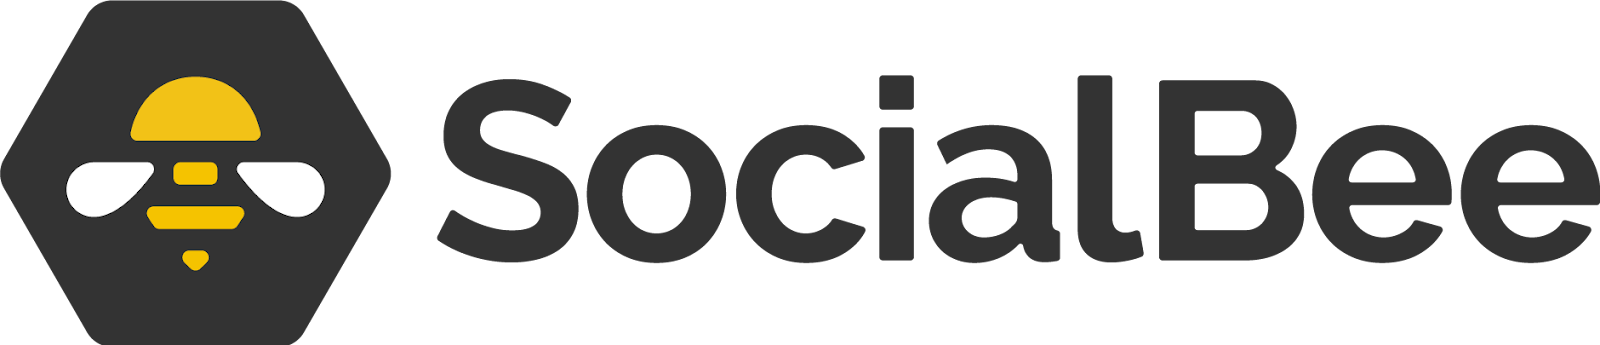 39 Proven Social Media Distribution Tools for Success Softlist.io